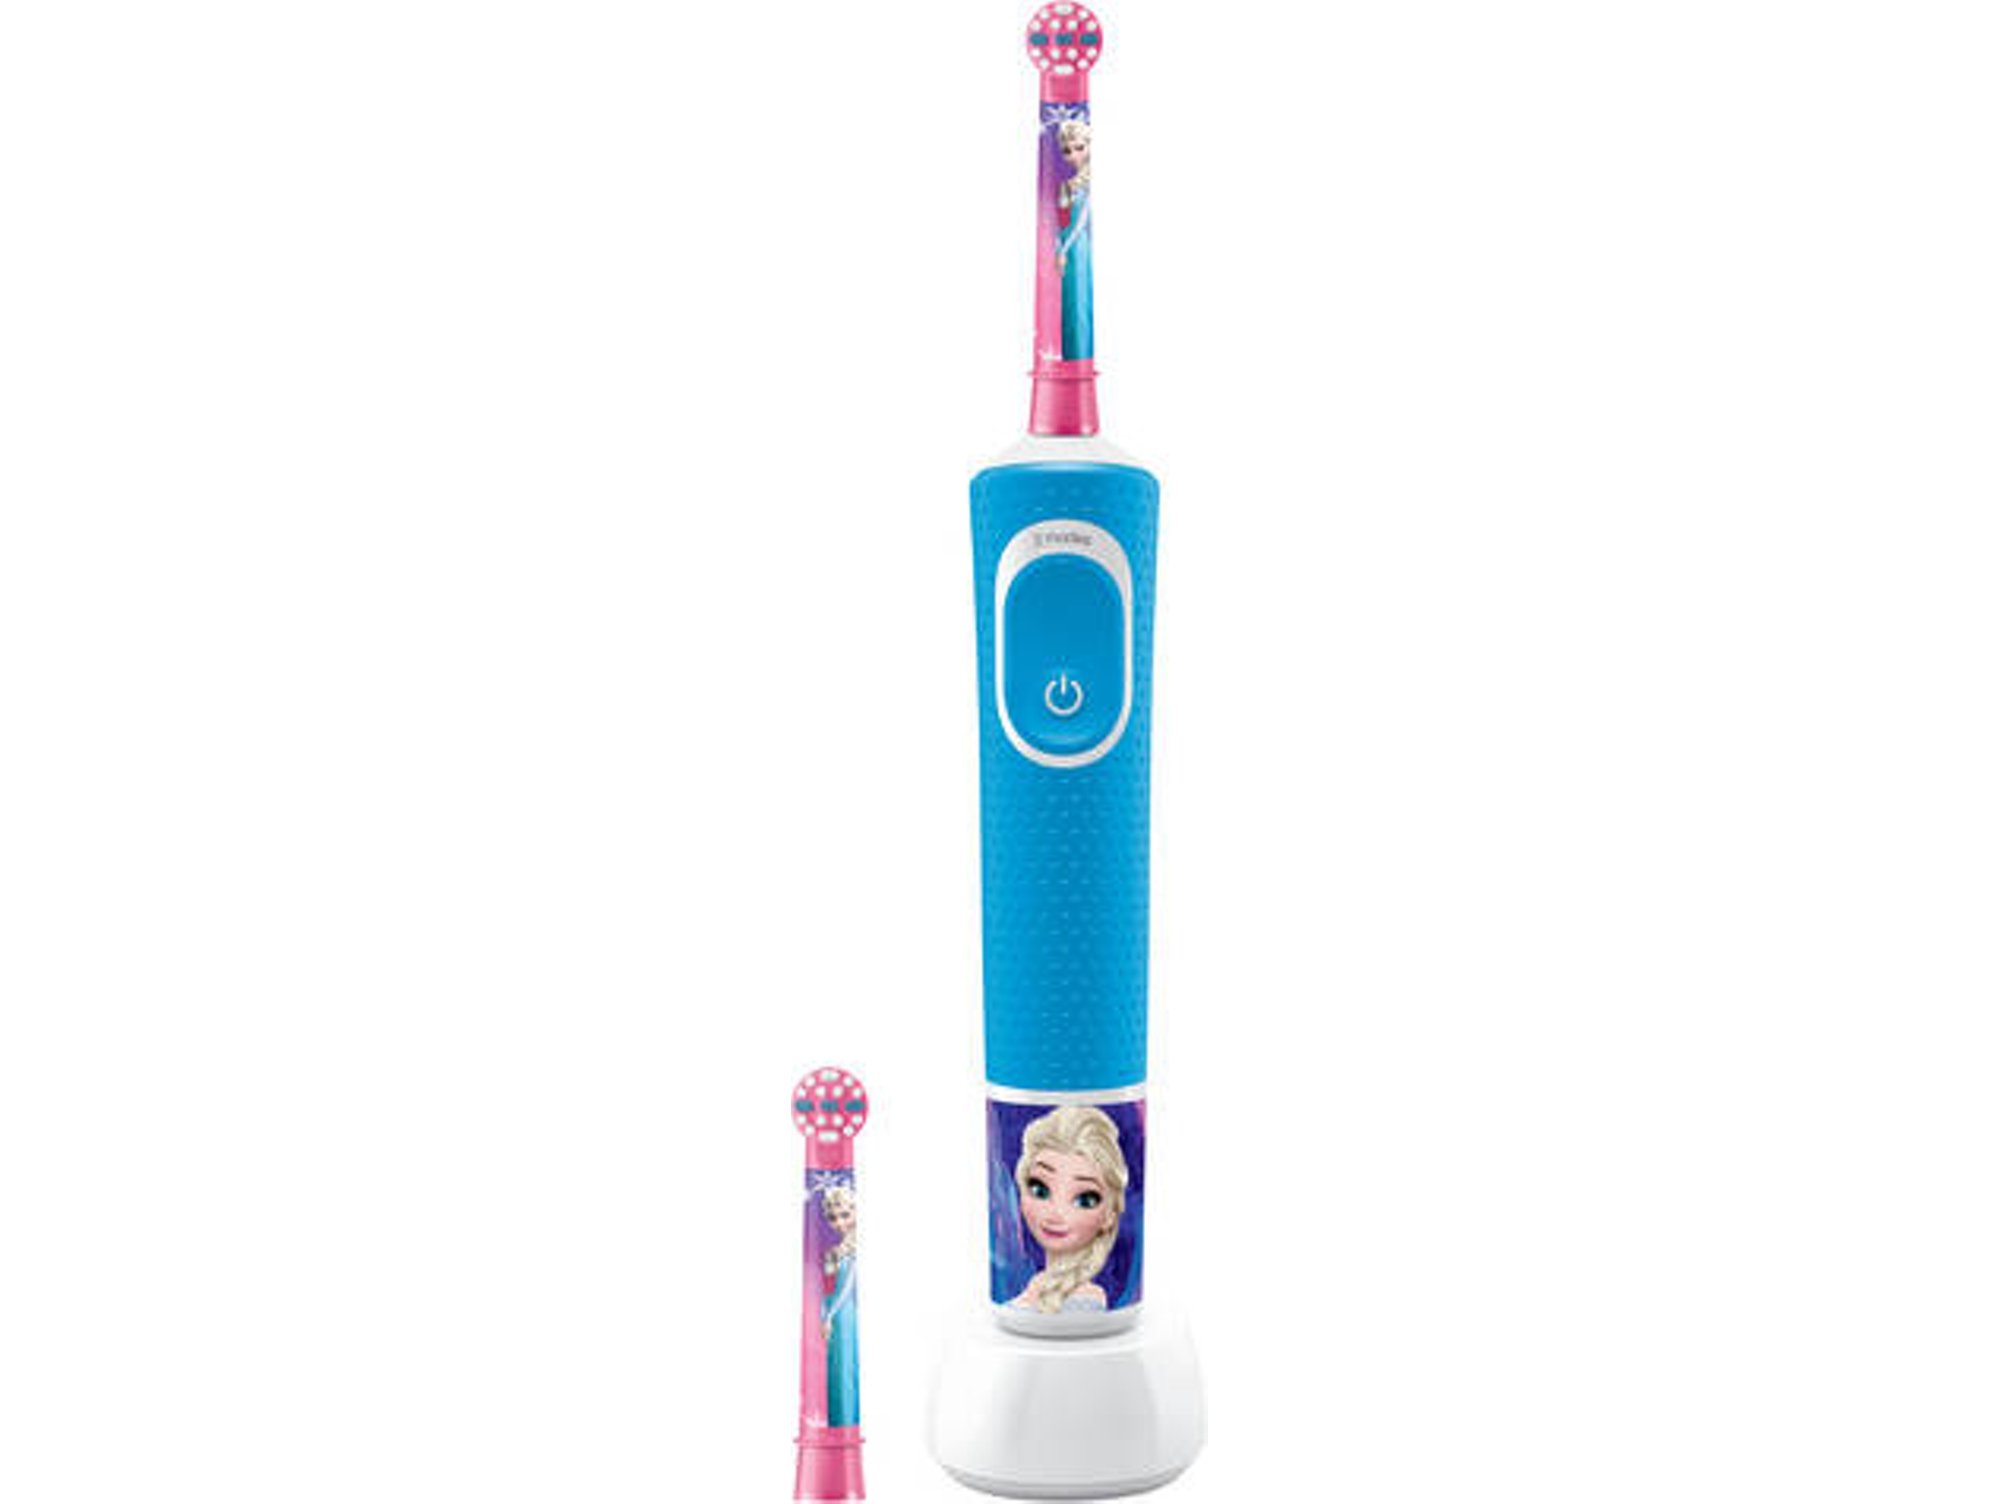 Cepillo Dental Infantil braun frozen oralb vitality kids plus box+2 recambios dientes blanco y azul 7600 rpm 100 para niños disney magic timer con mango 2 recargable tecnología 3